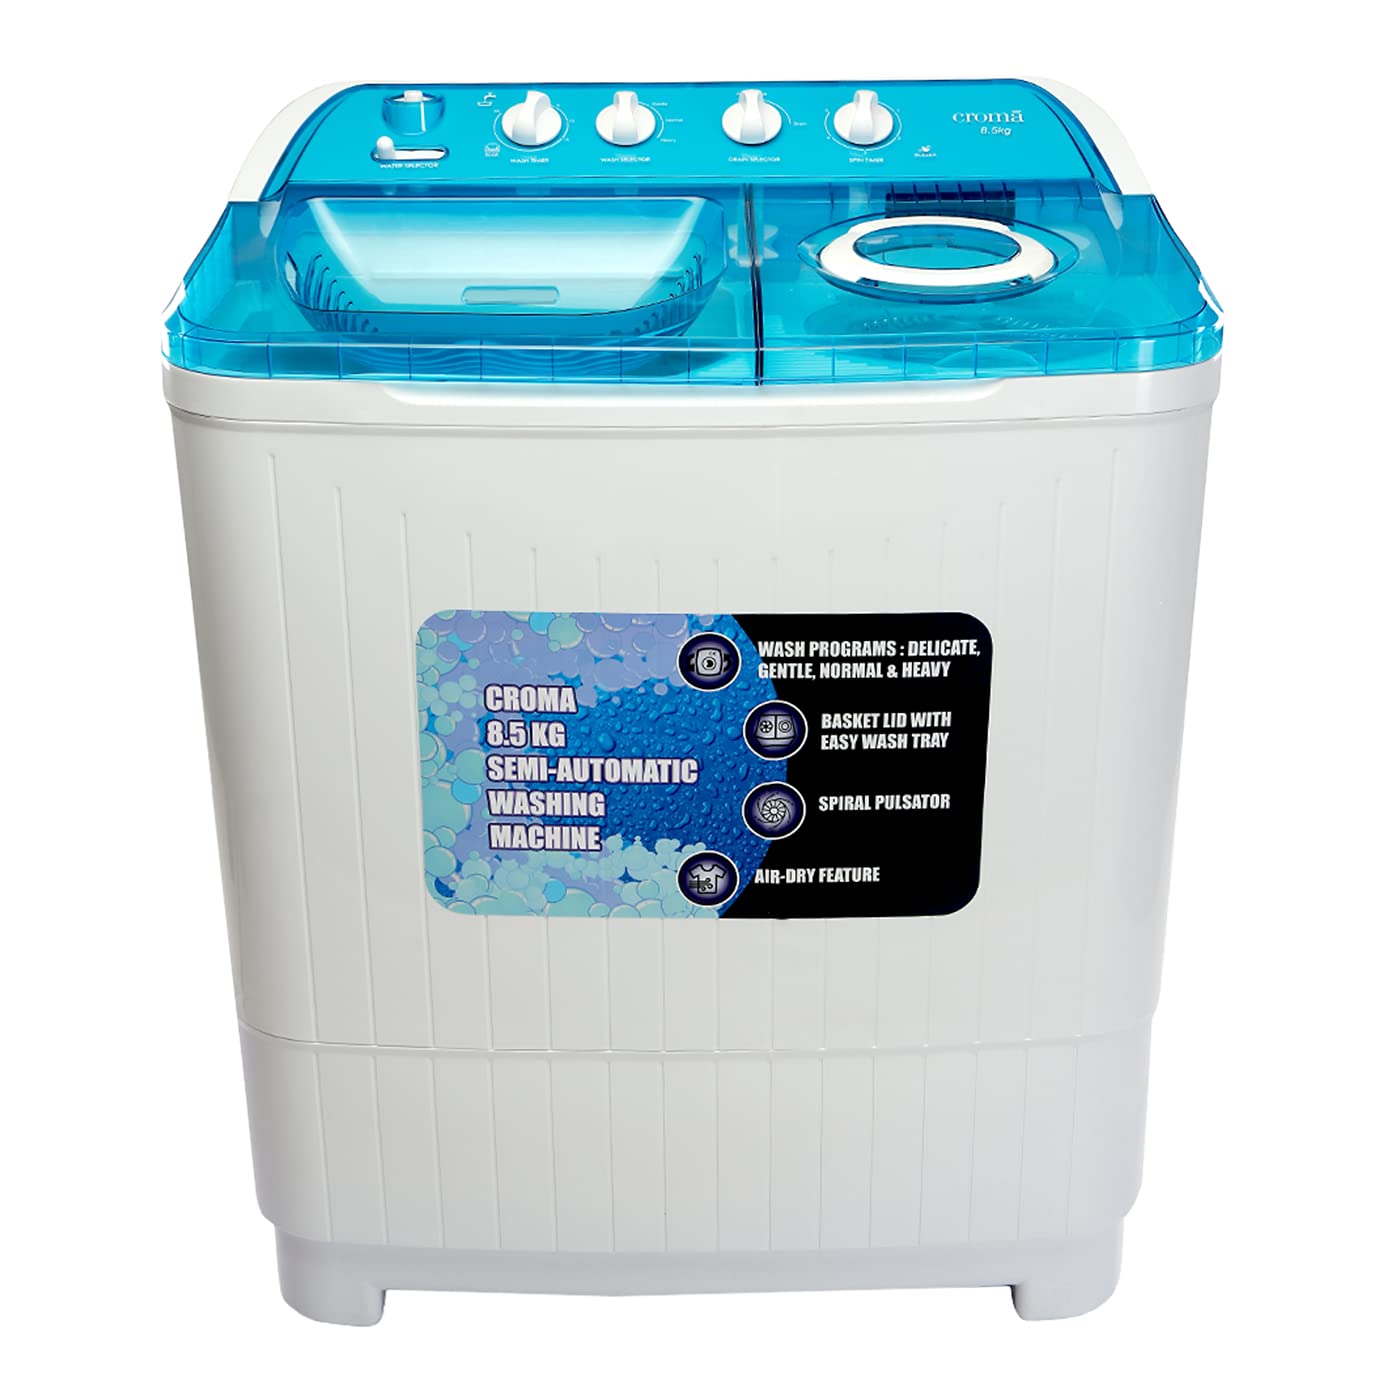 Croma Semi-automatic Top-load Washing Machine 8.5 kg   